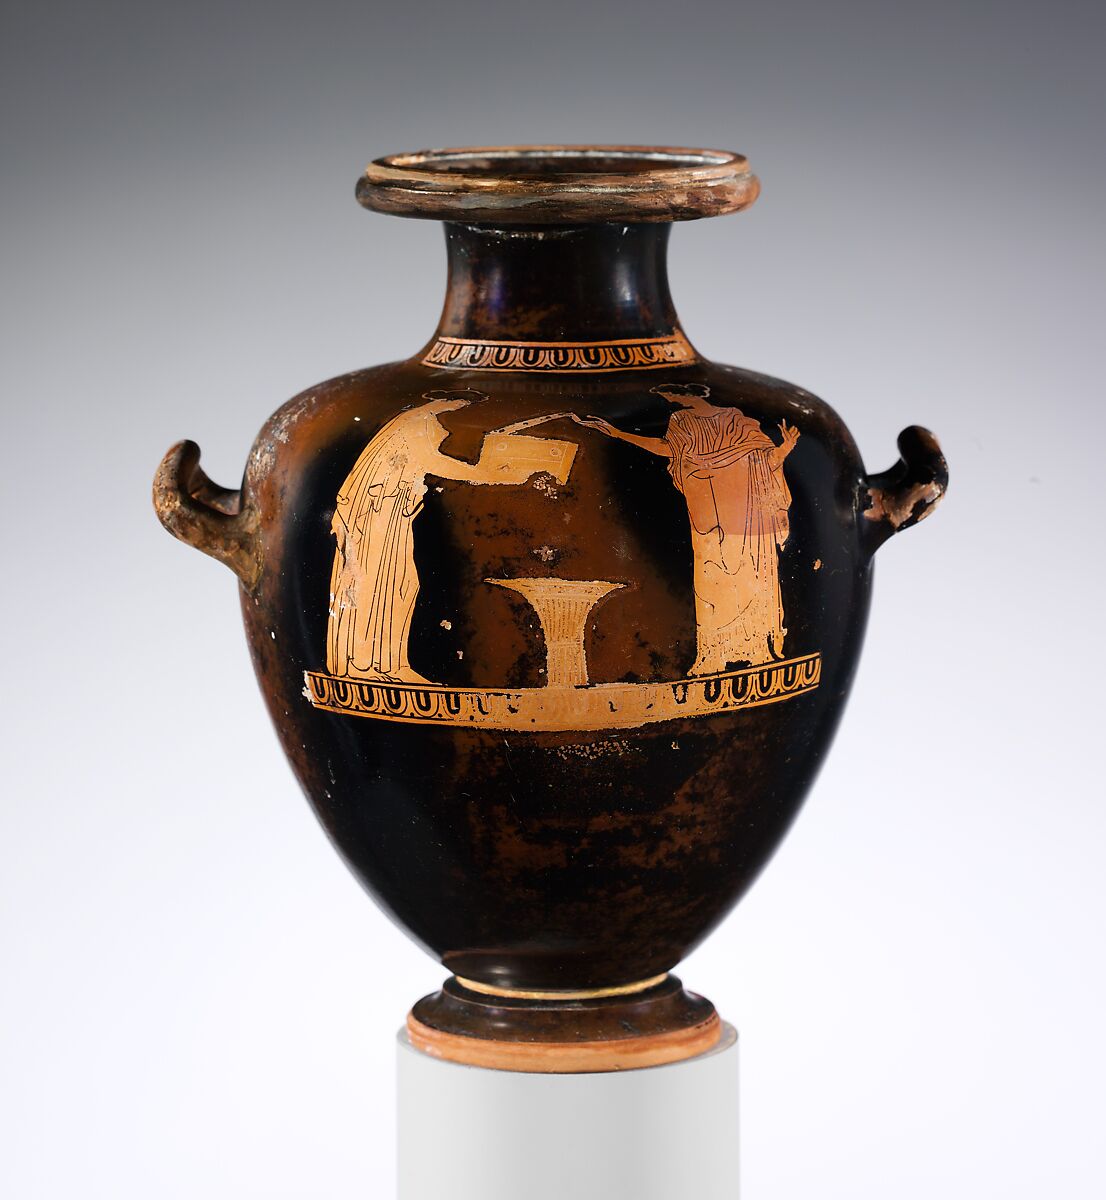 Terracotta hydria: kalpis (water jar), Attributed to the Shuvalov Painter, Terracotta, Greek, Attic 